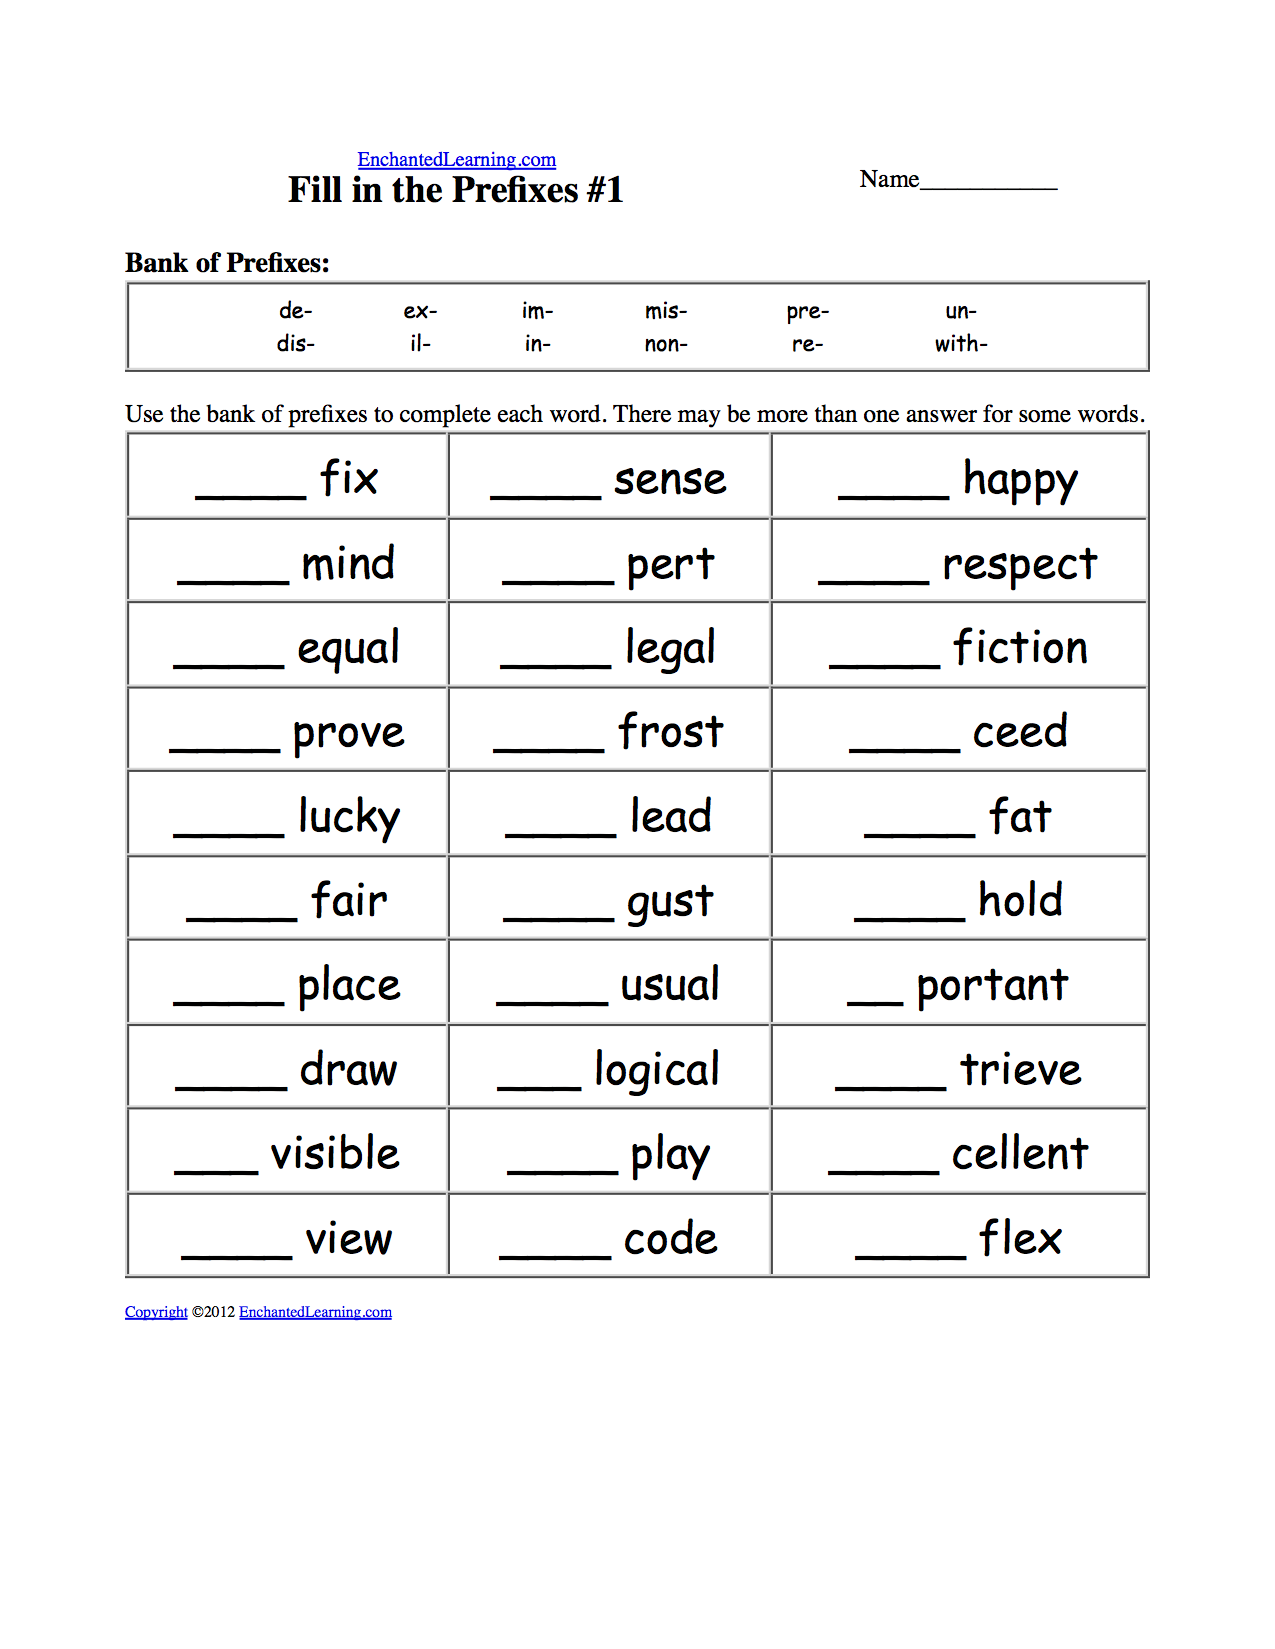 Fill in the Prefixes #1